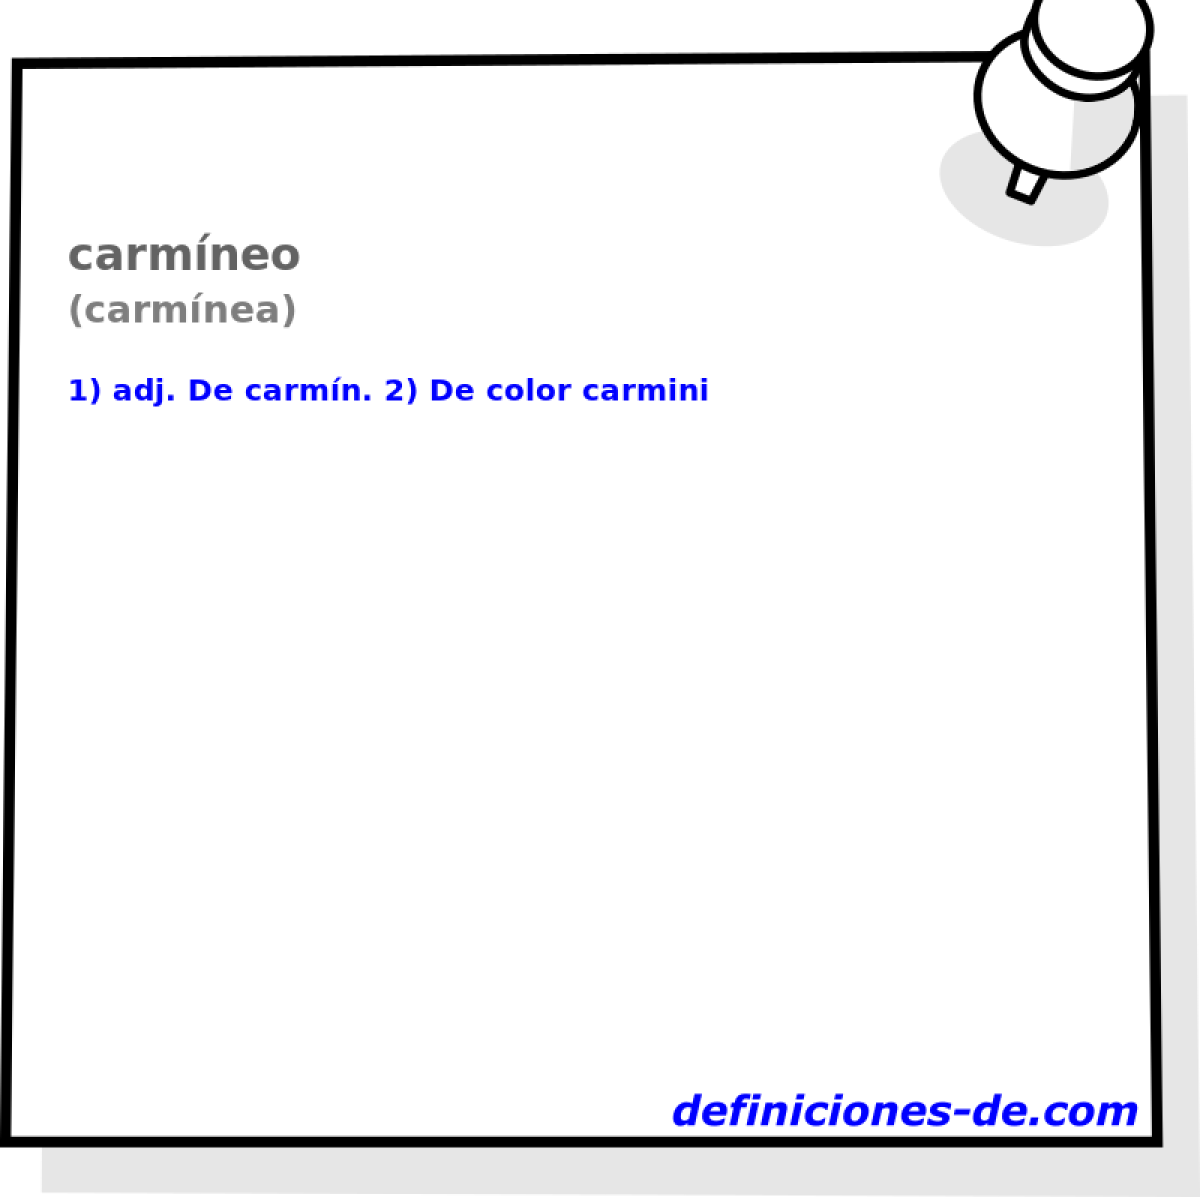 carmneo (carmnea)